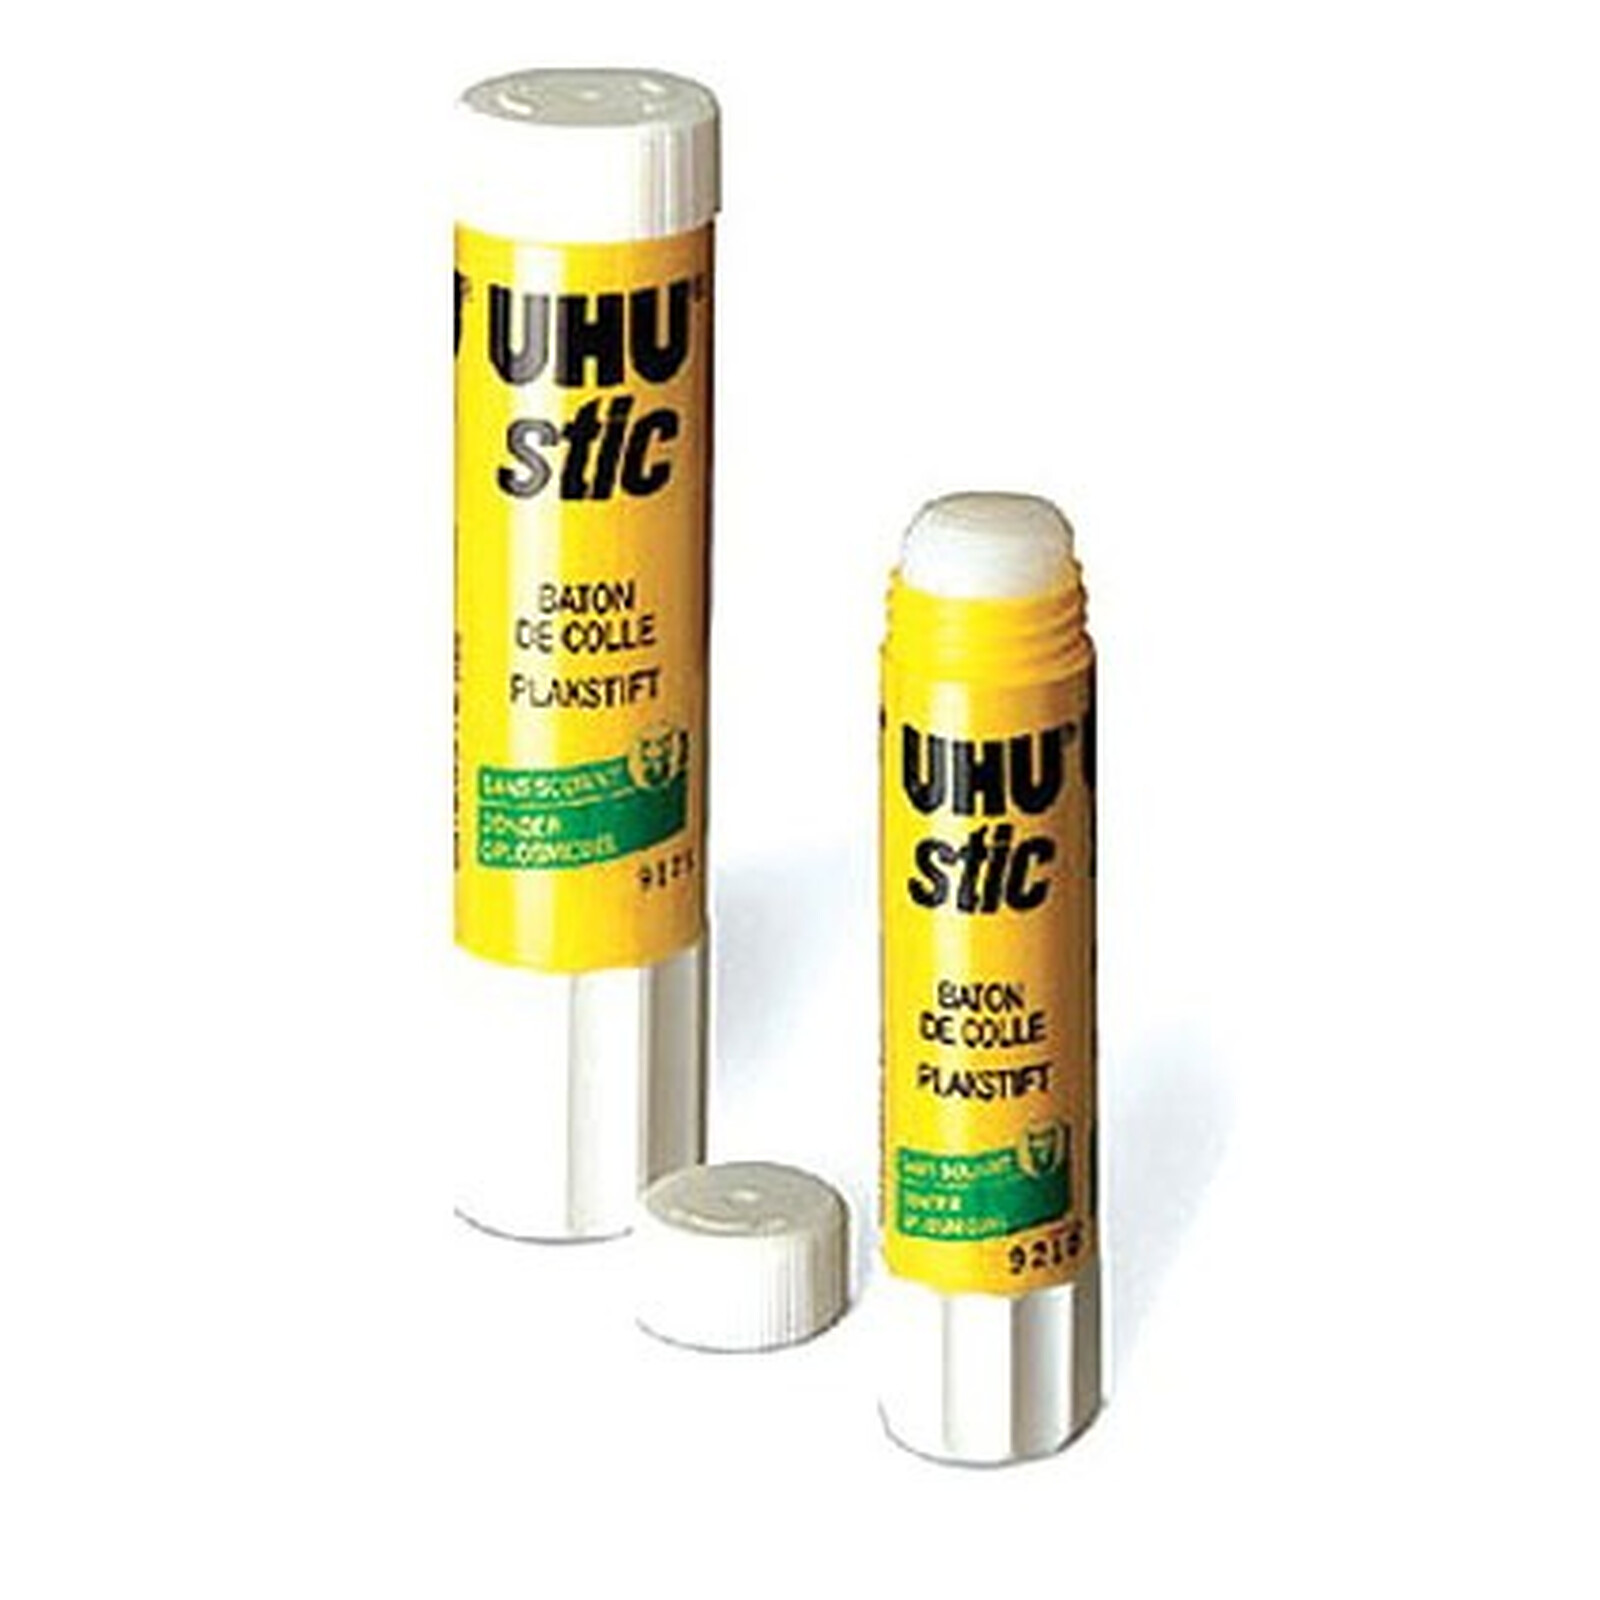 UHU Stic baton de colle 21 g - Ruban adhésif & colle - LDLC